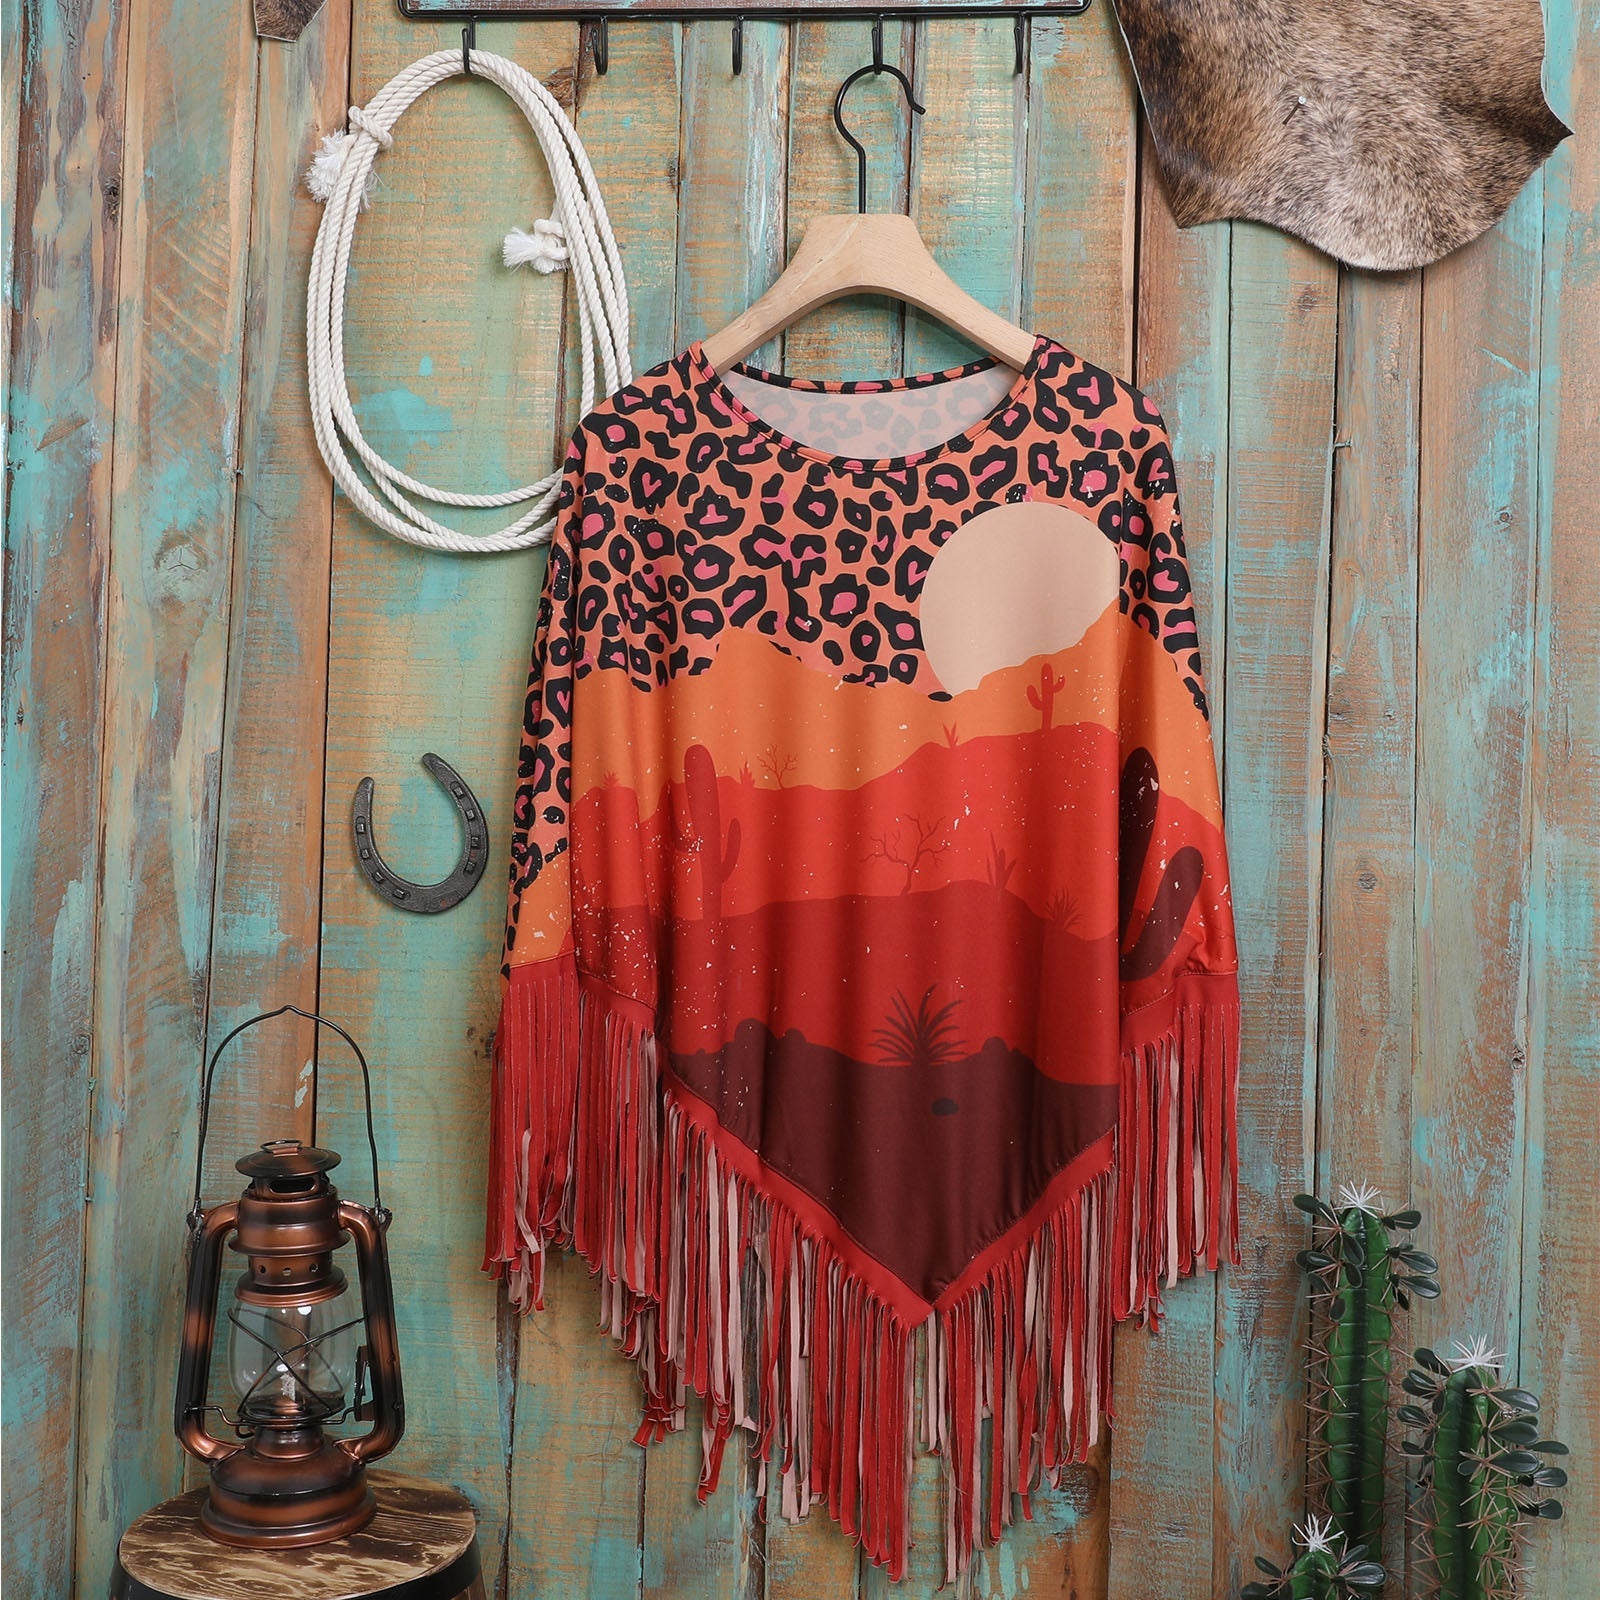 Montana West Orange Desert Sunset Print Fringe Poncho - Cowgirl Wear